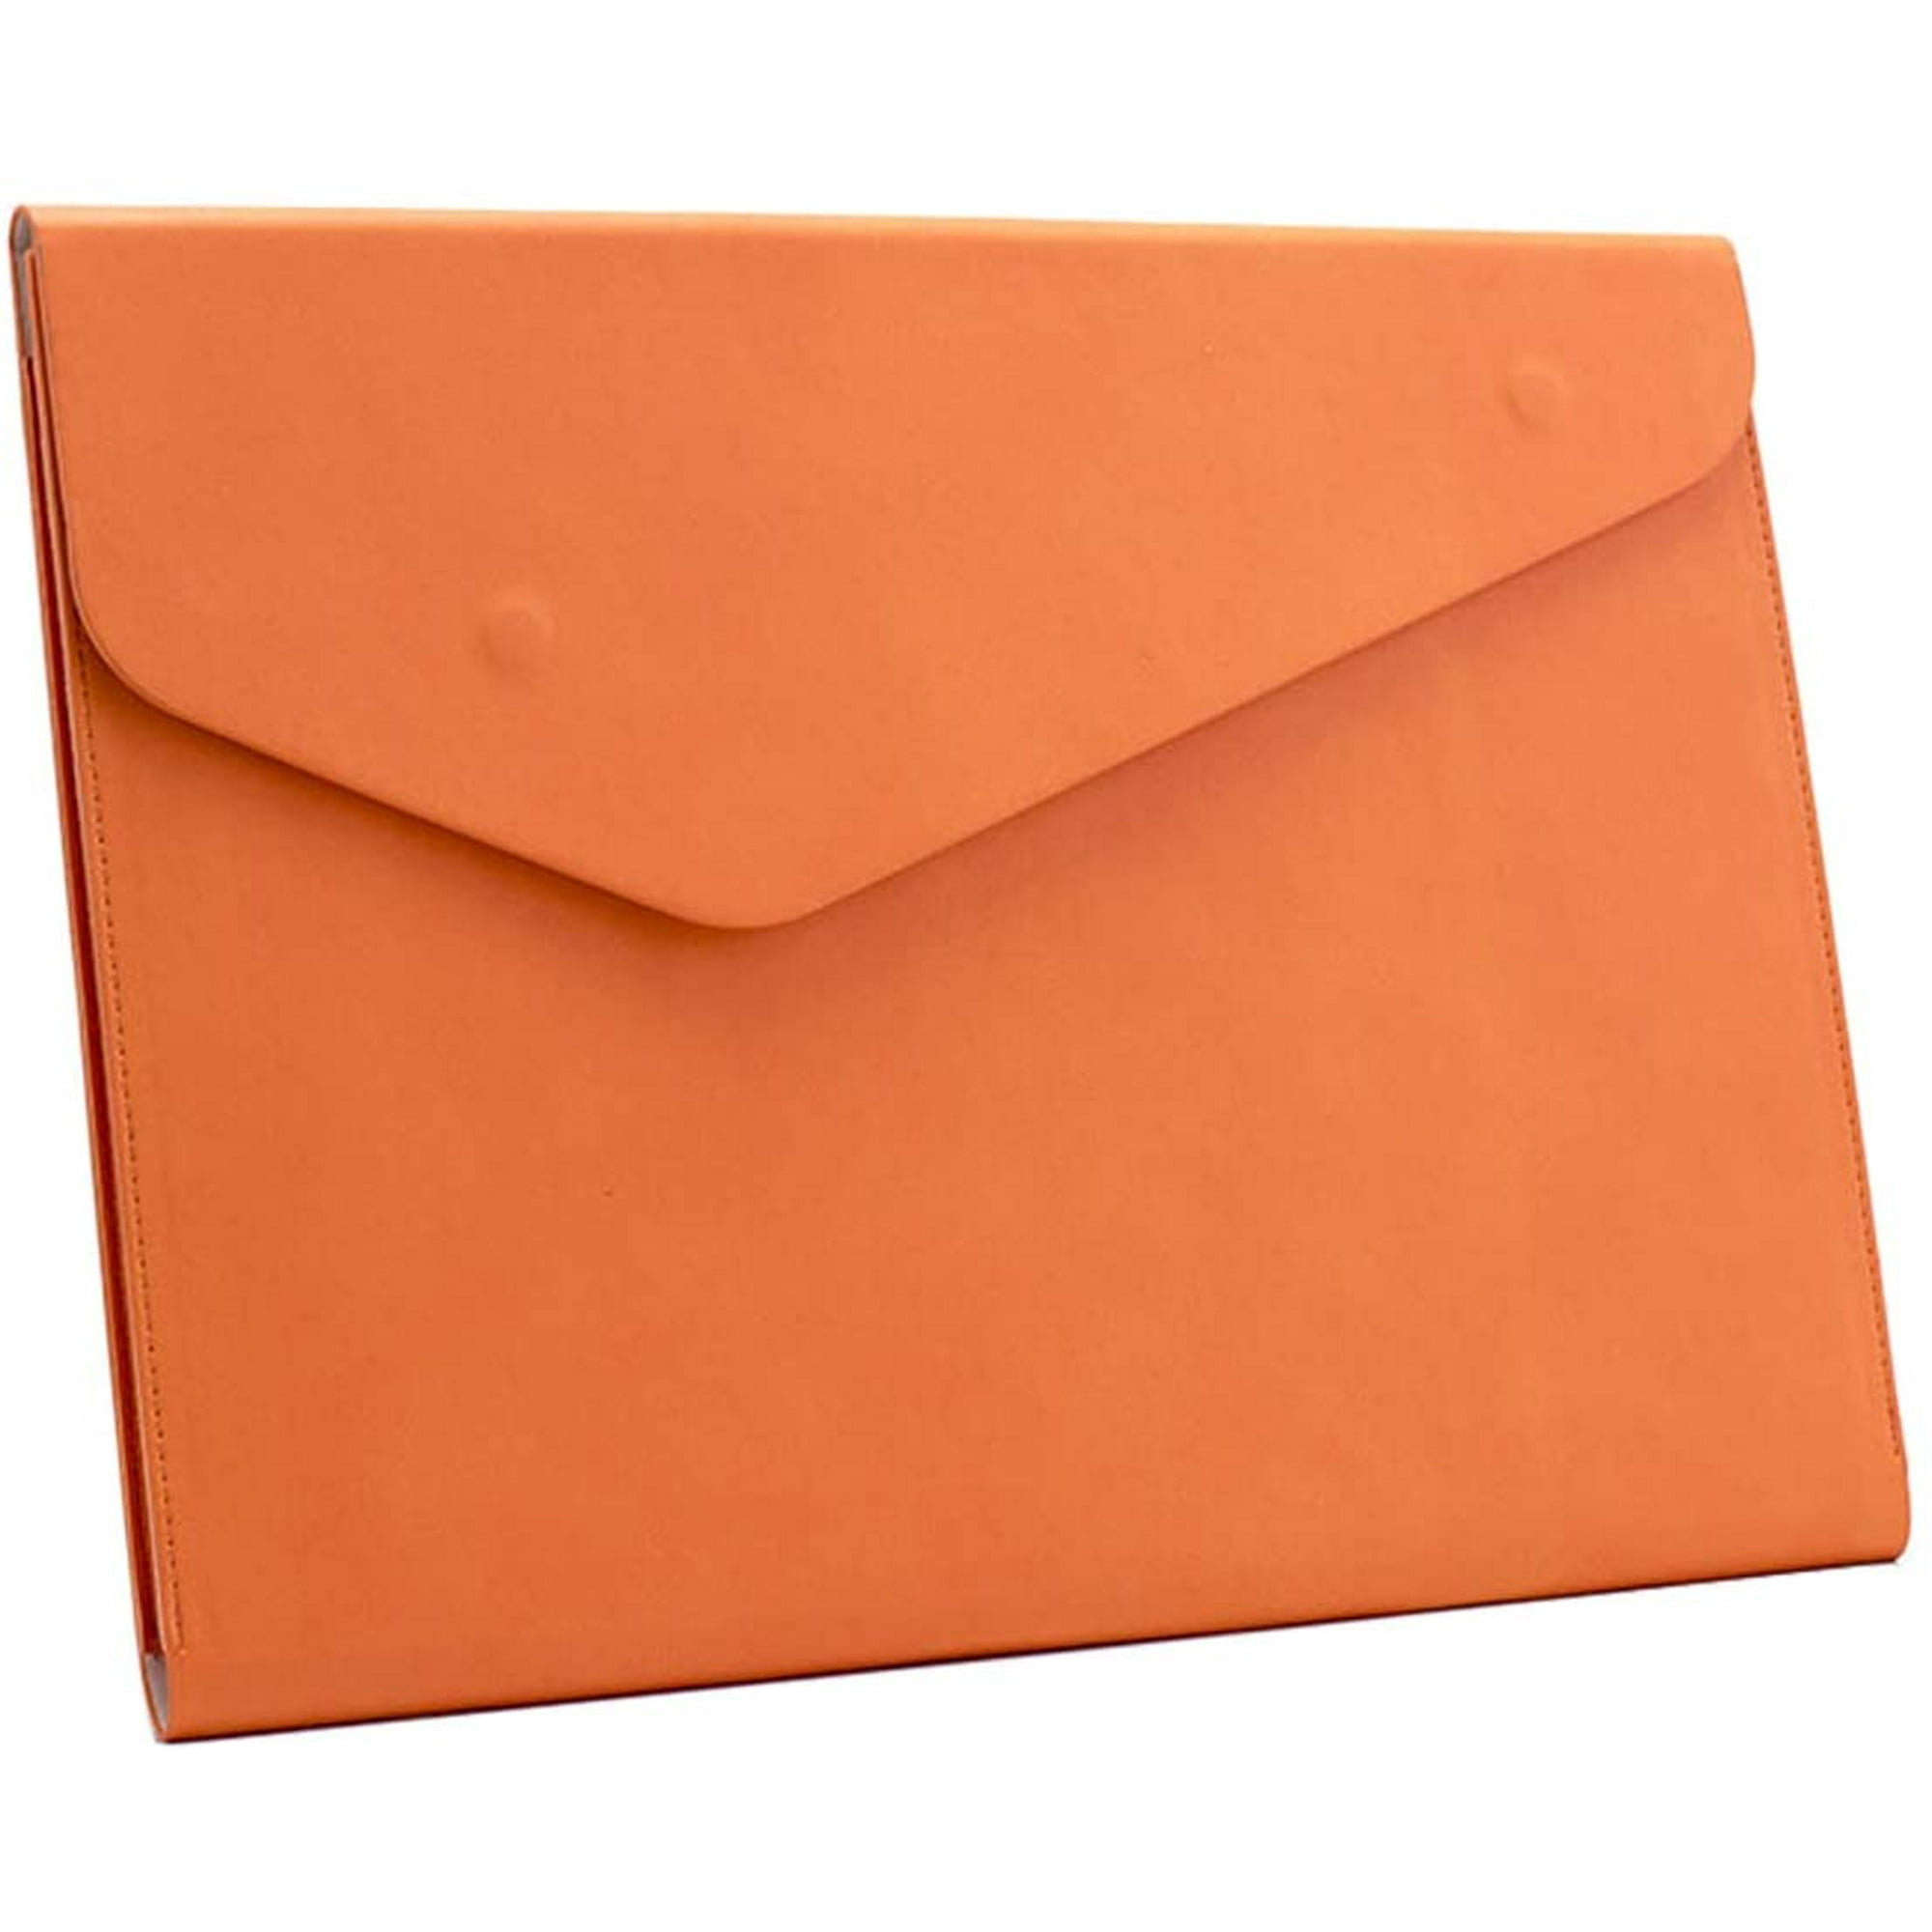 PU Leather A4 File Folder Document Holder Waterproof Portfolio Envelope  Folder Case with Invisible Magnetic Closure